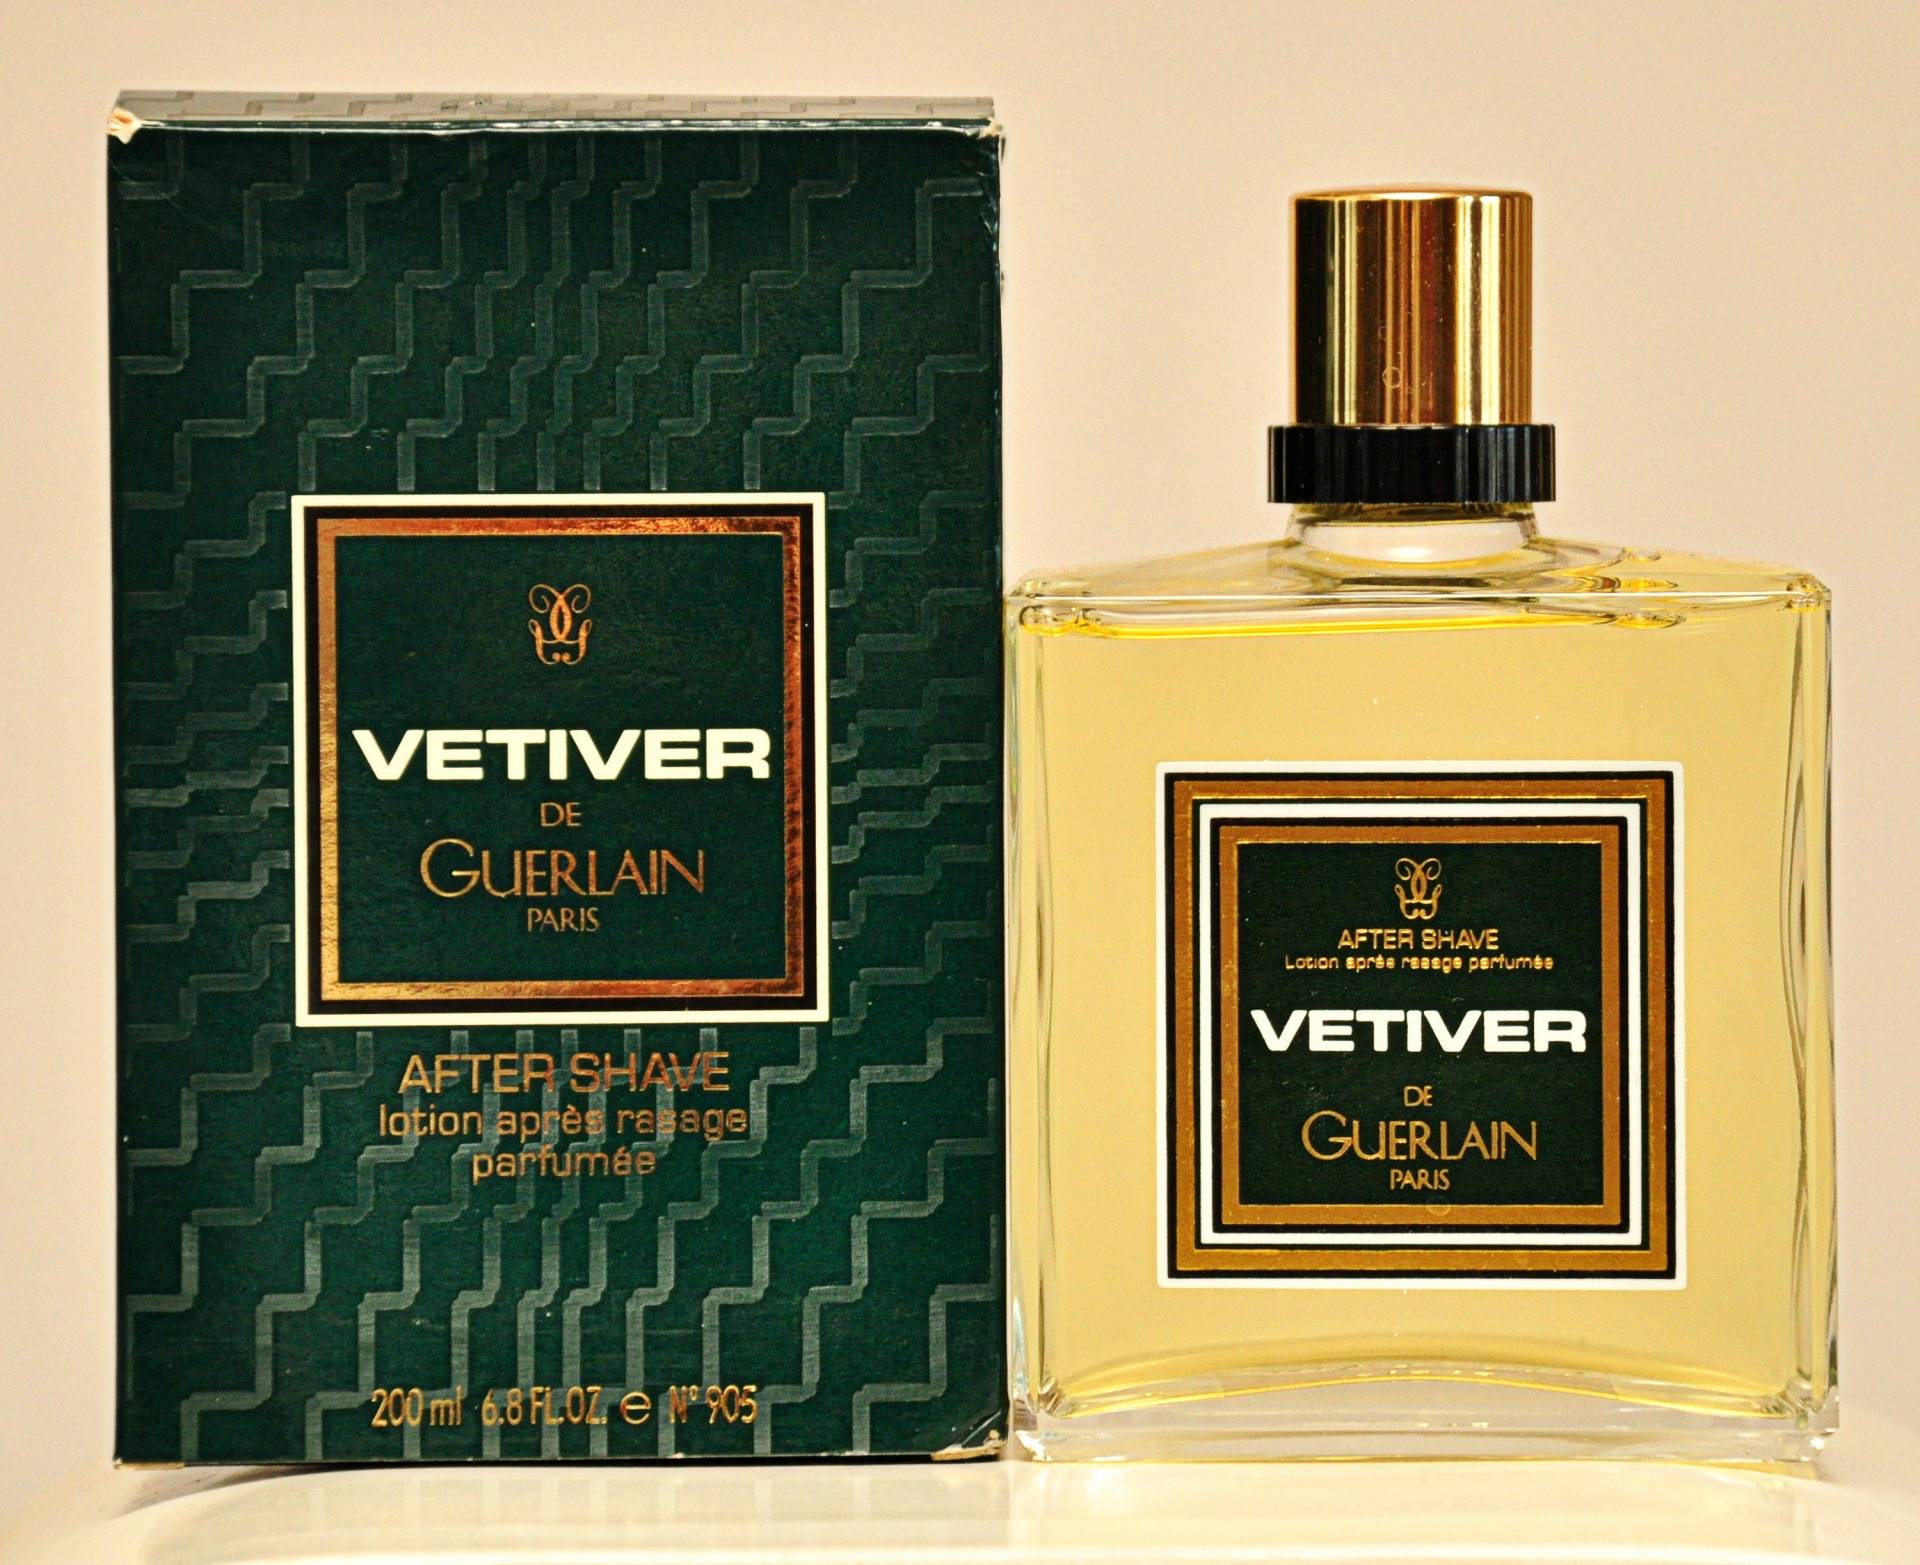 Guerlain Vetiver De Lotion Après Rasage Parfumée 200Ml Splash Non Spray Perfume Man Very Rare Vintage 1959 Version 1992 von Etsy - YourVintagePerfume